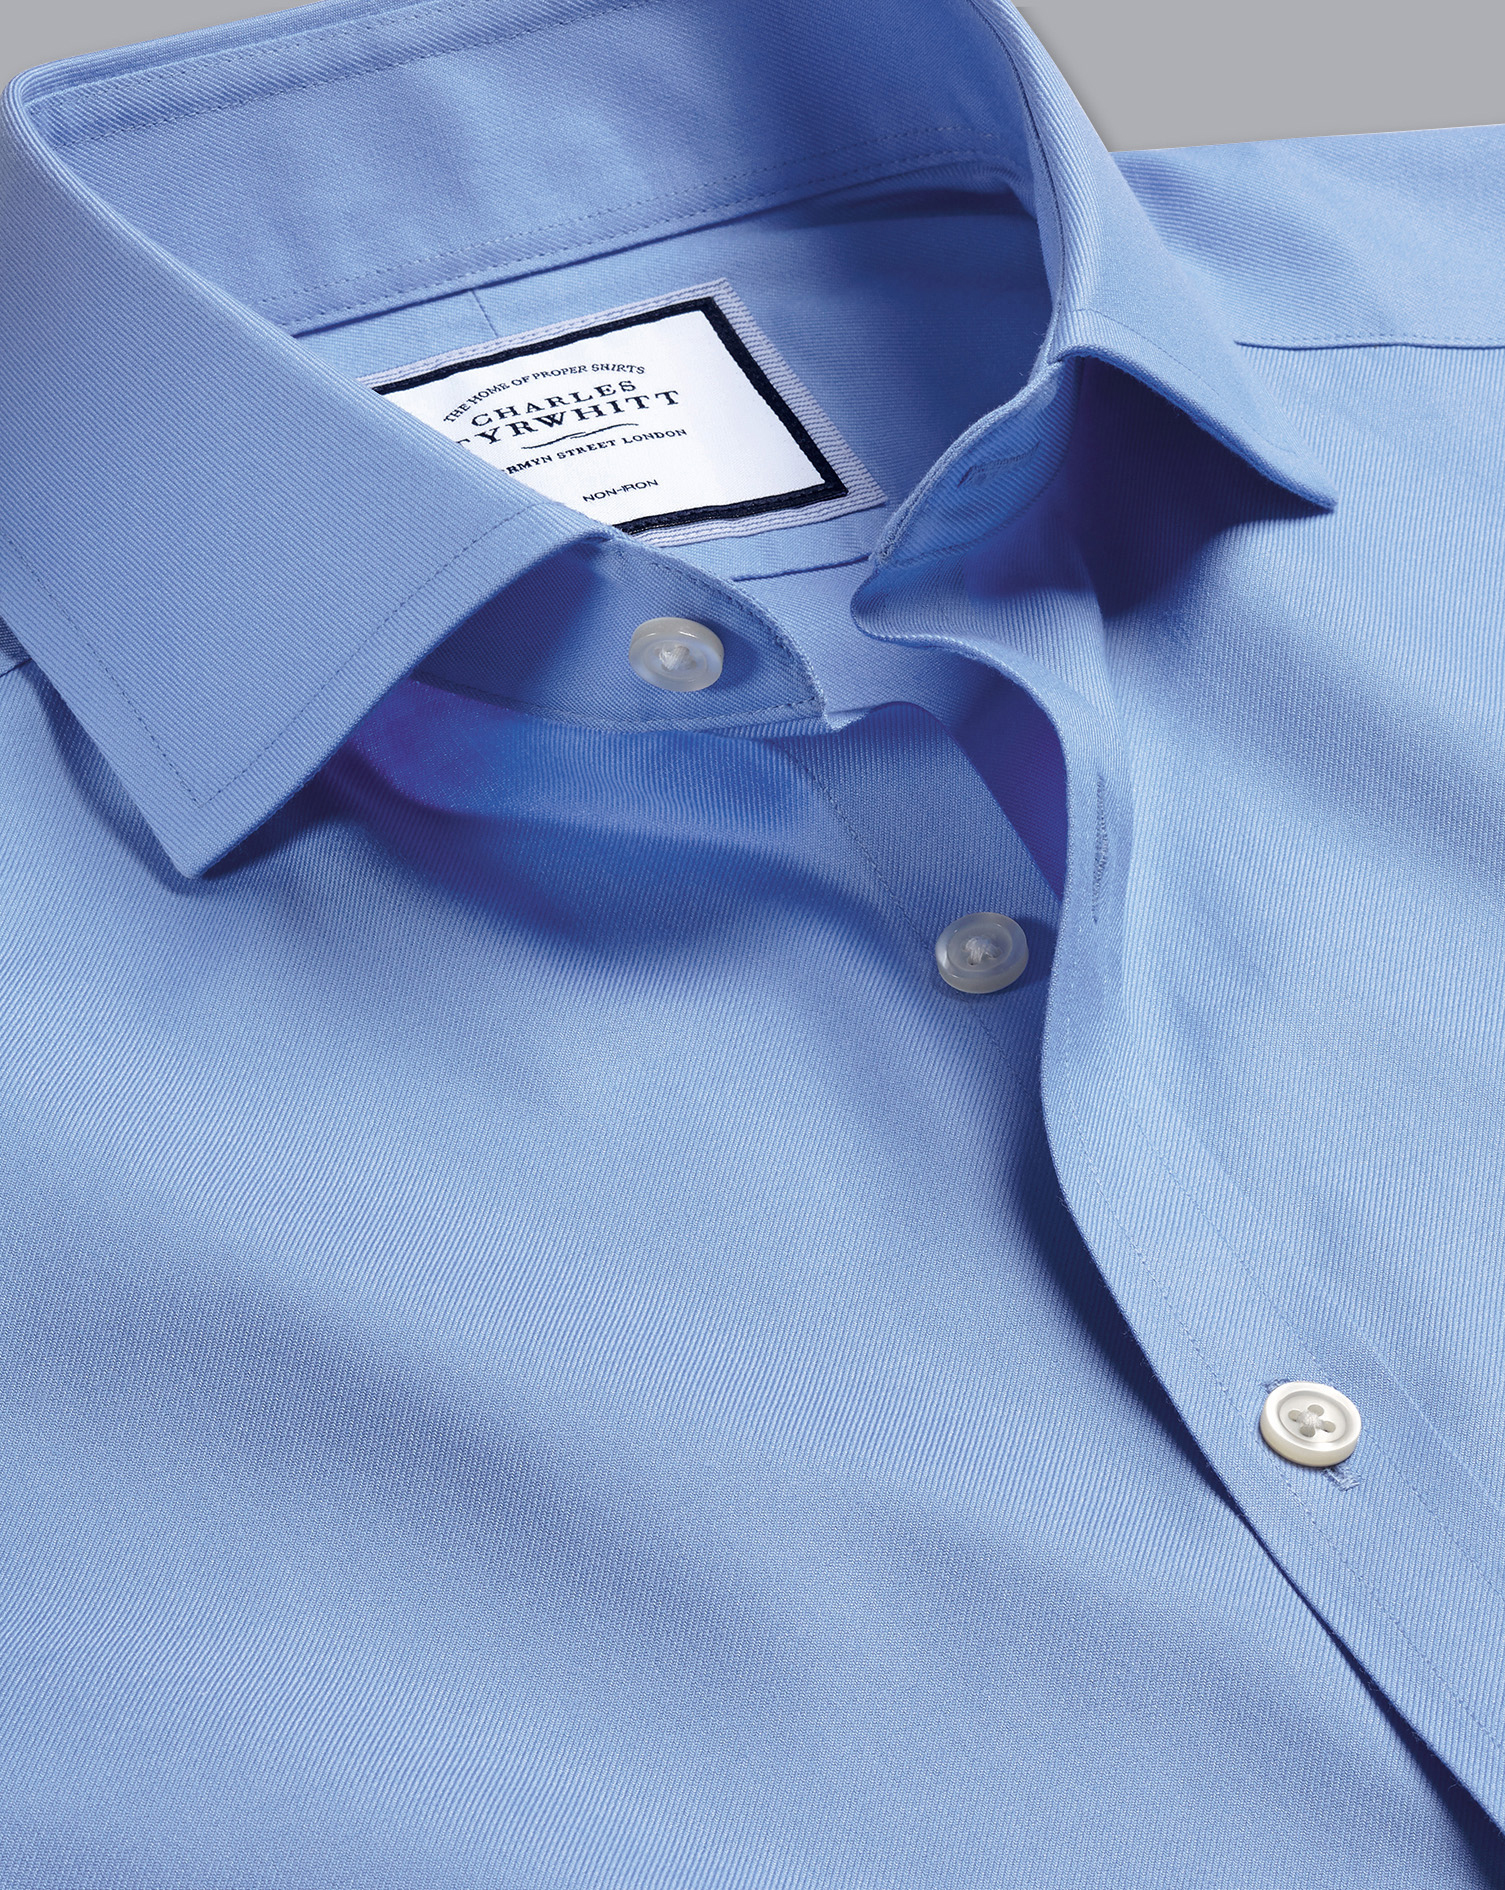 Men's Charles Tyrwhitt Cutaway Collar Non-Iron Twill Dress Shirt - Cornflower Blue French Cuff Size 